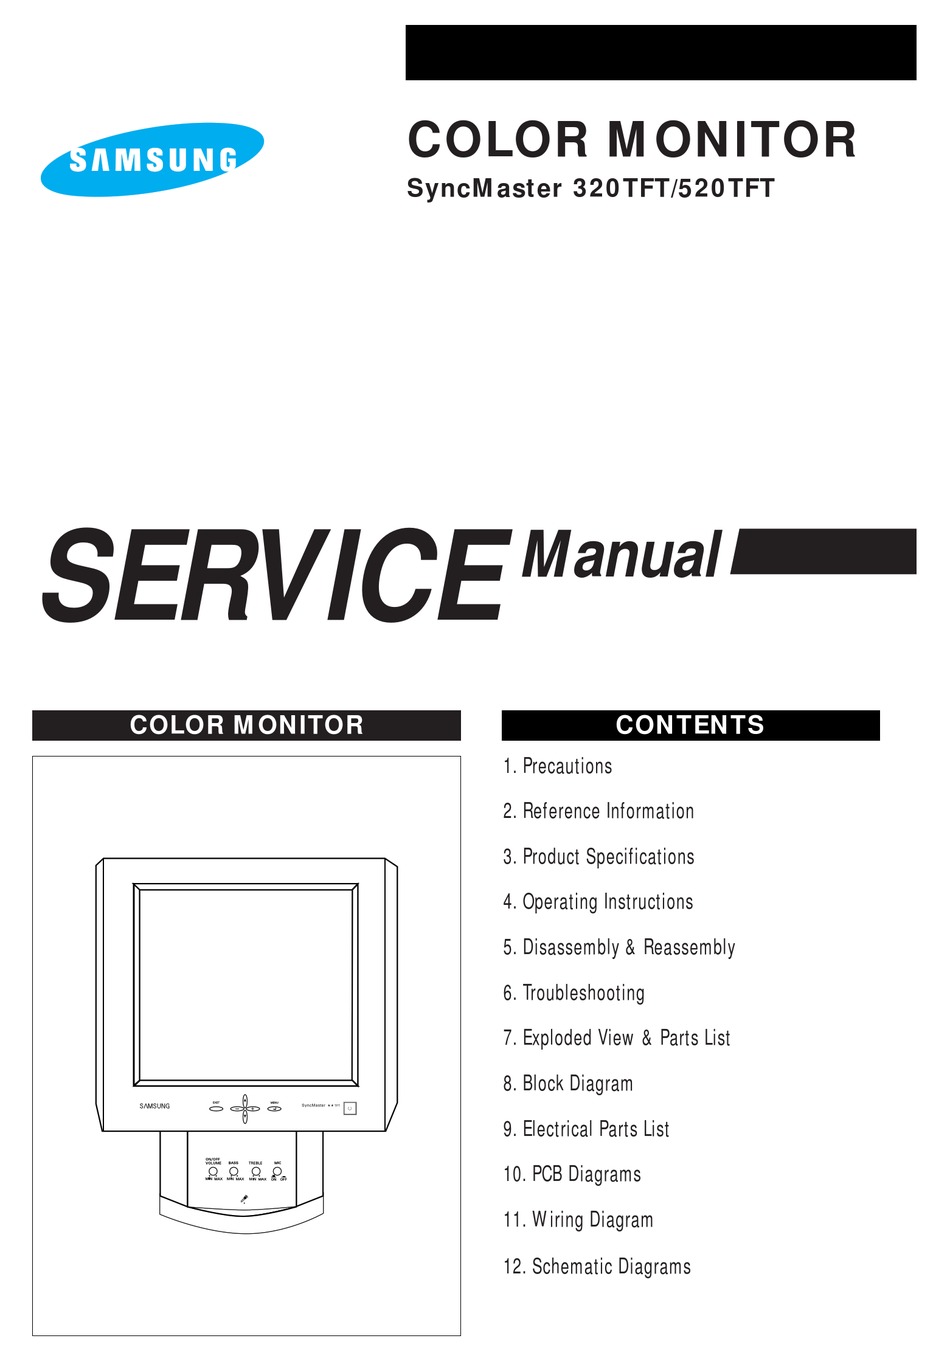 SAMSUNG SYNCMASTER 320TFT SERVICE MANUAL Pdf Download | ManualsLib